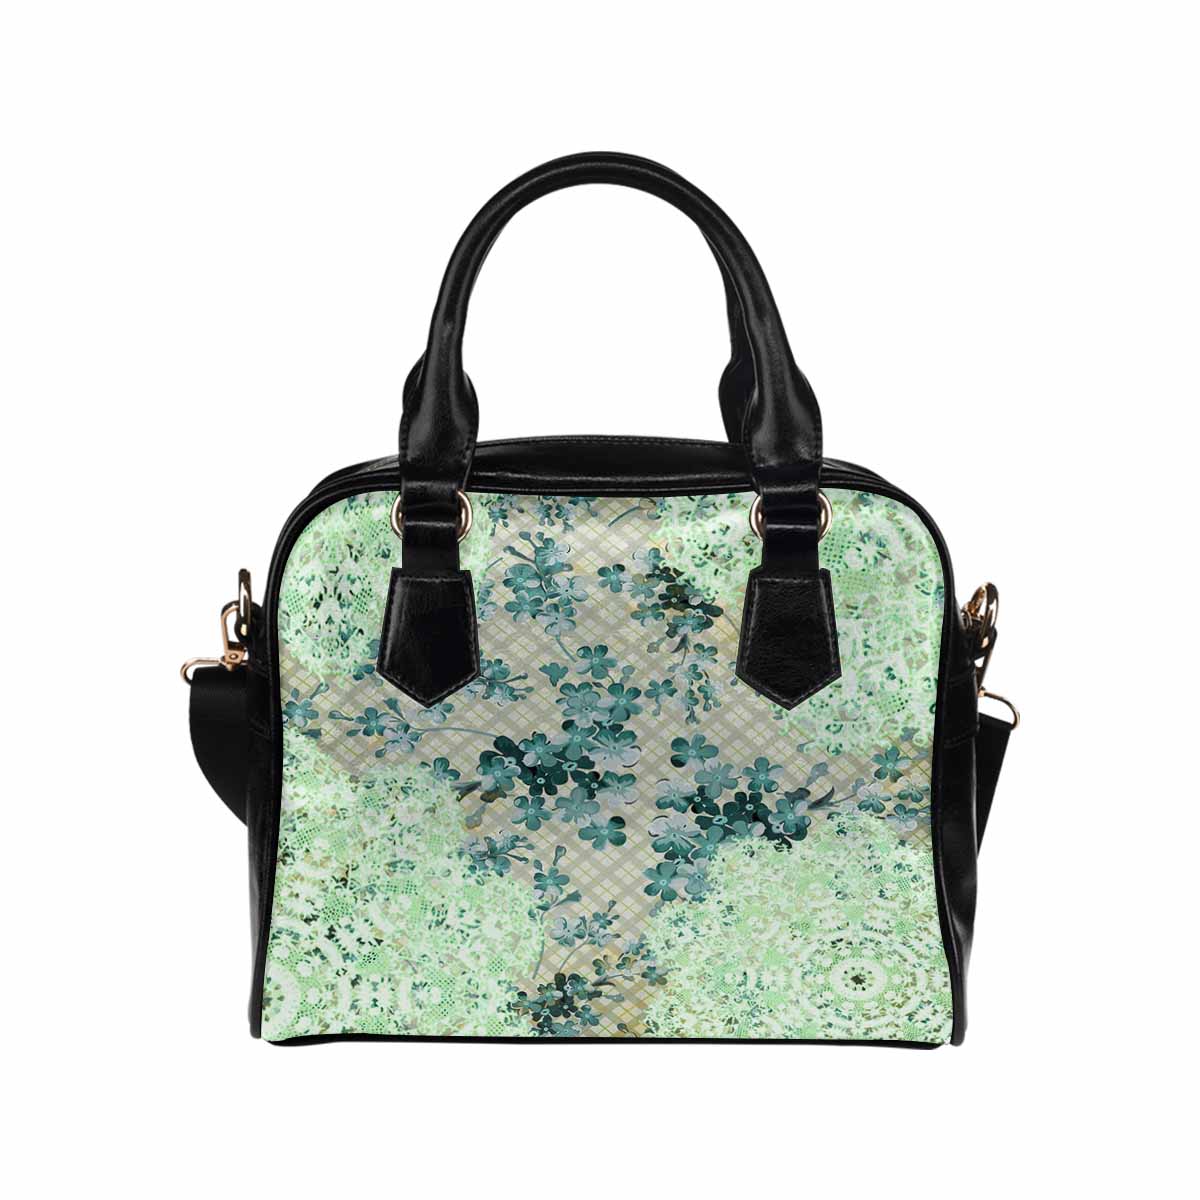 Victorian lace print, cute handbag, Mod 19163453, design 53